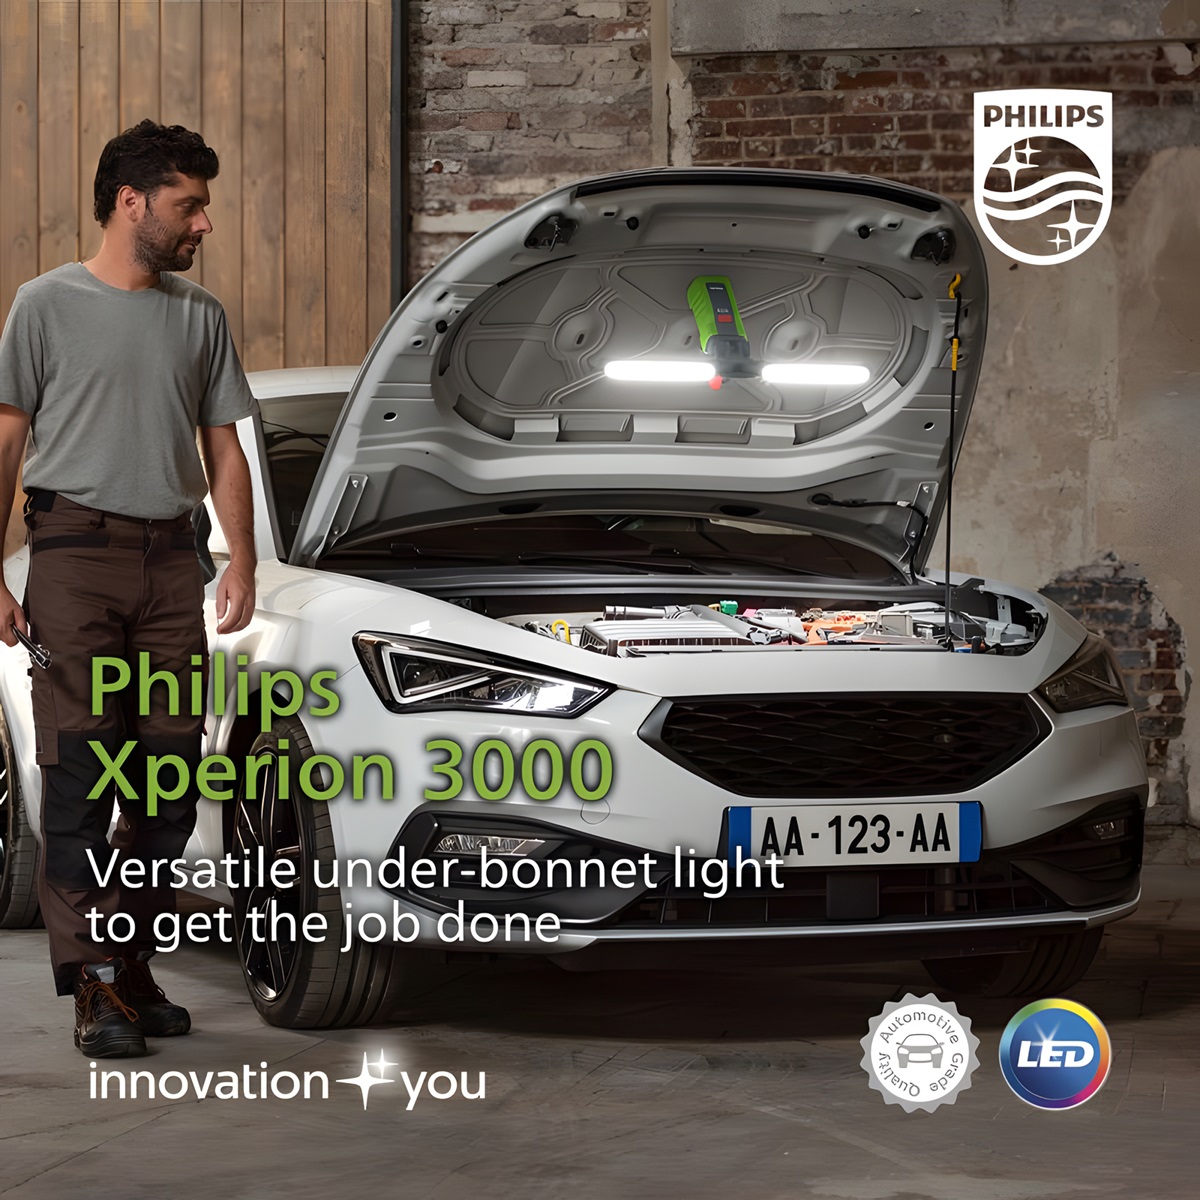 New Philips Xperion 3000 Under-bonnet LED Light Brings Brightness and Enhanced Flexibility